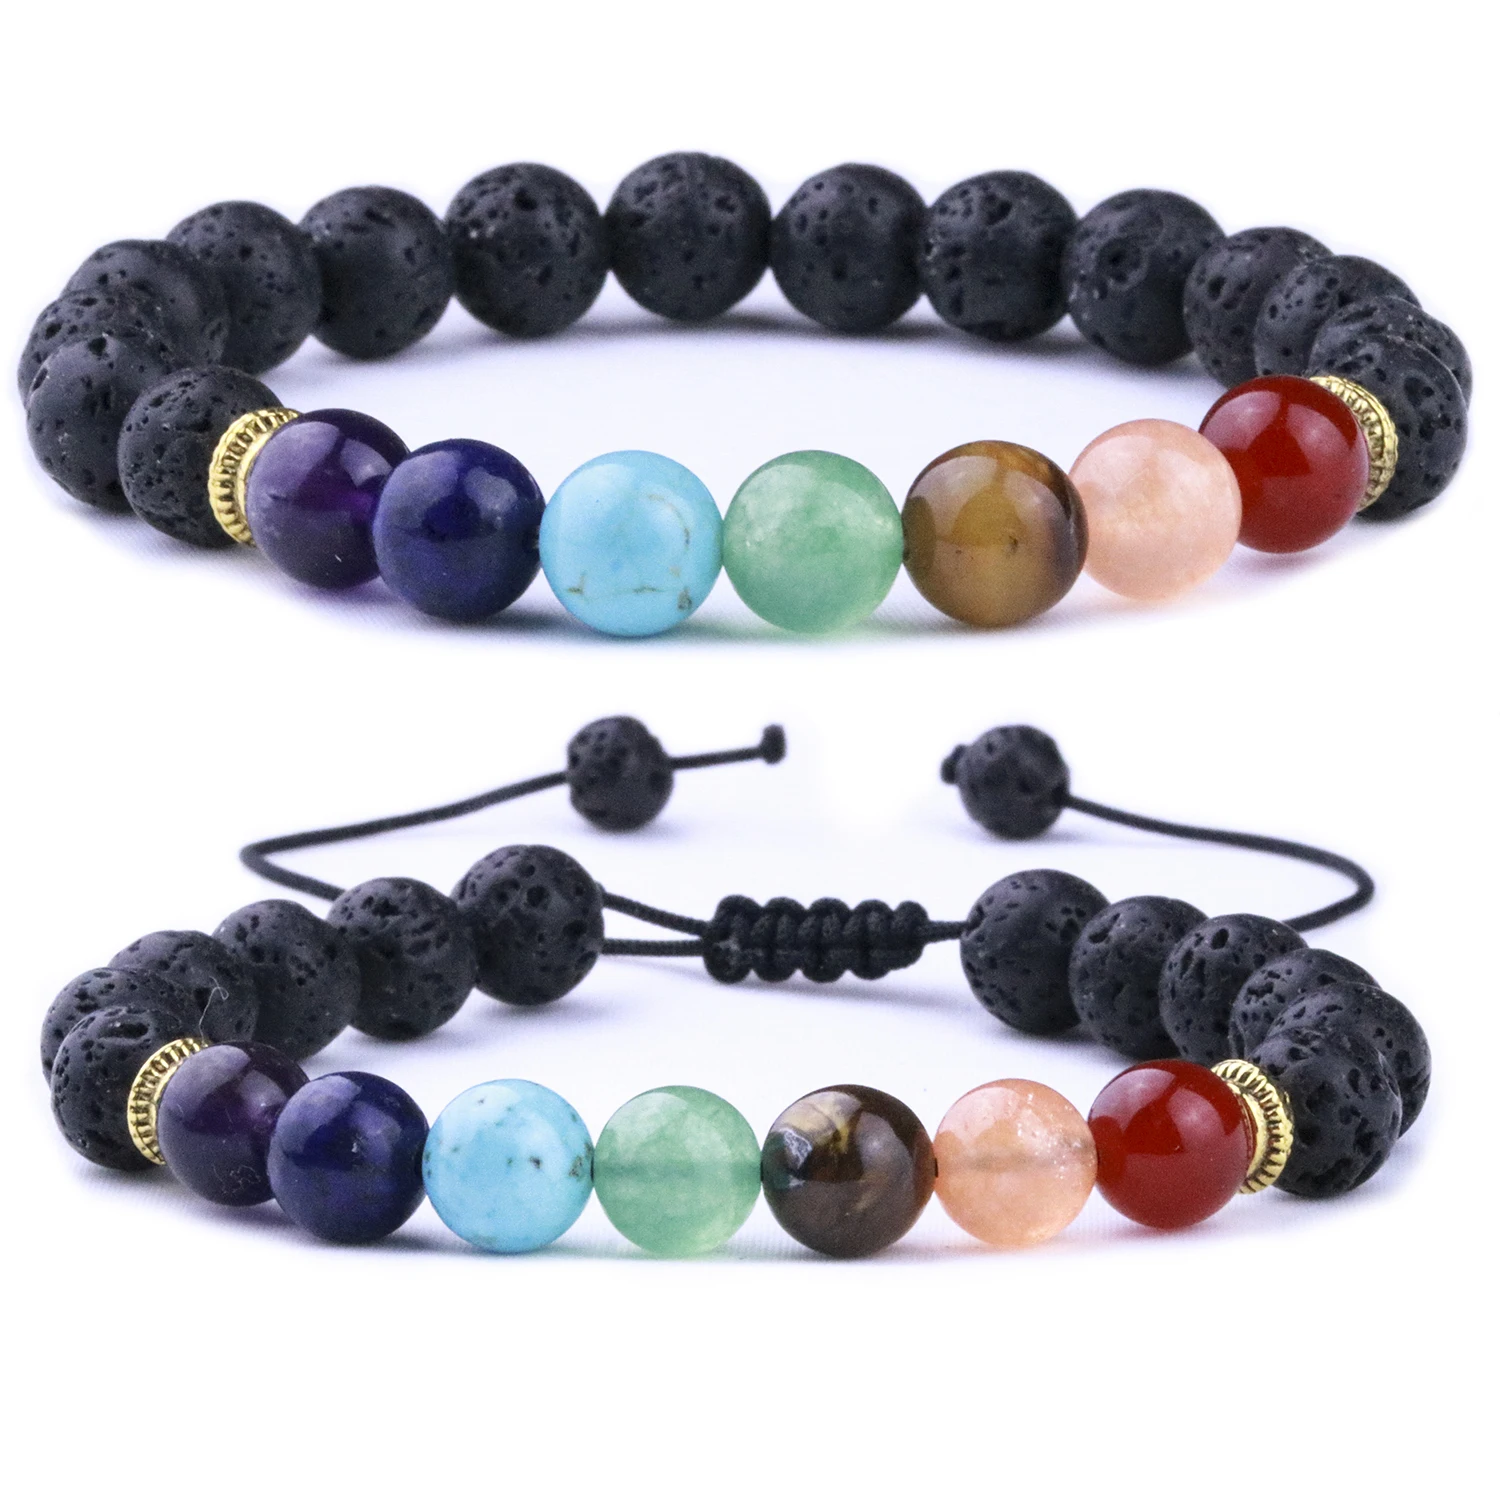 

8mm Lava Stone Weave 7 Chakra Healing Balance Beads Reiki Aromatherapy Essential Oil Diffuser Bracelet Jewelry